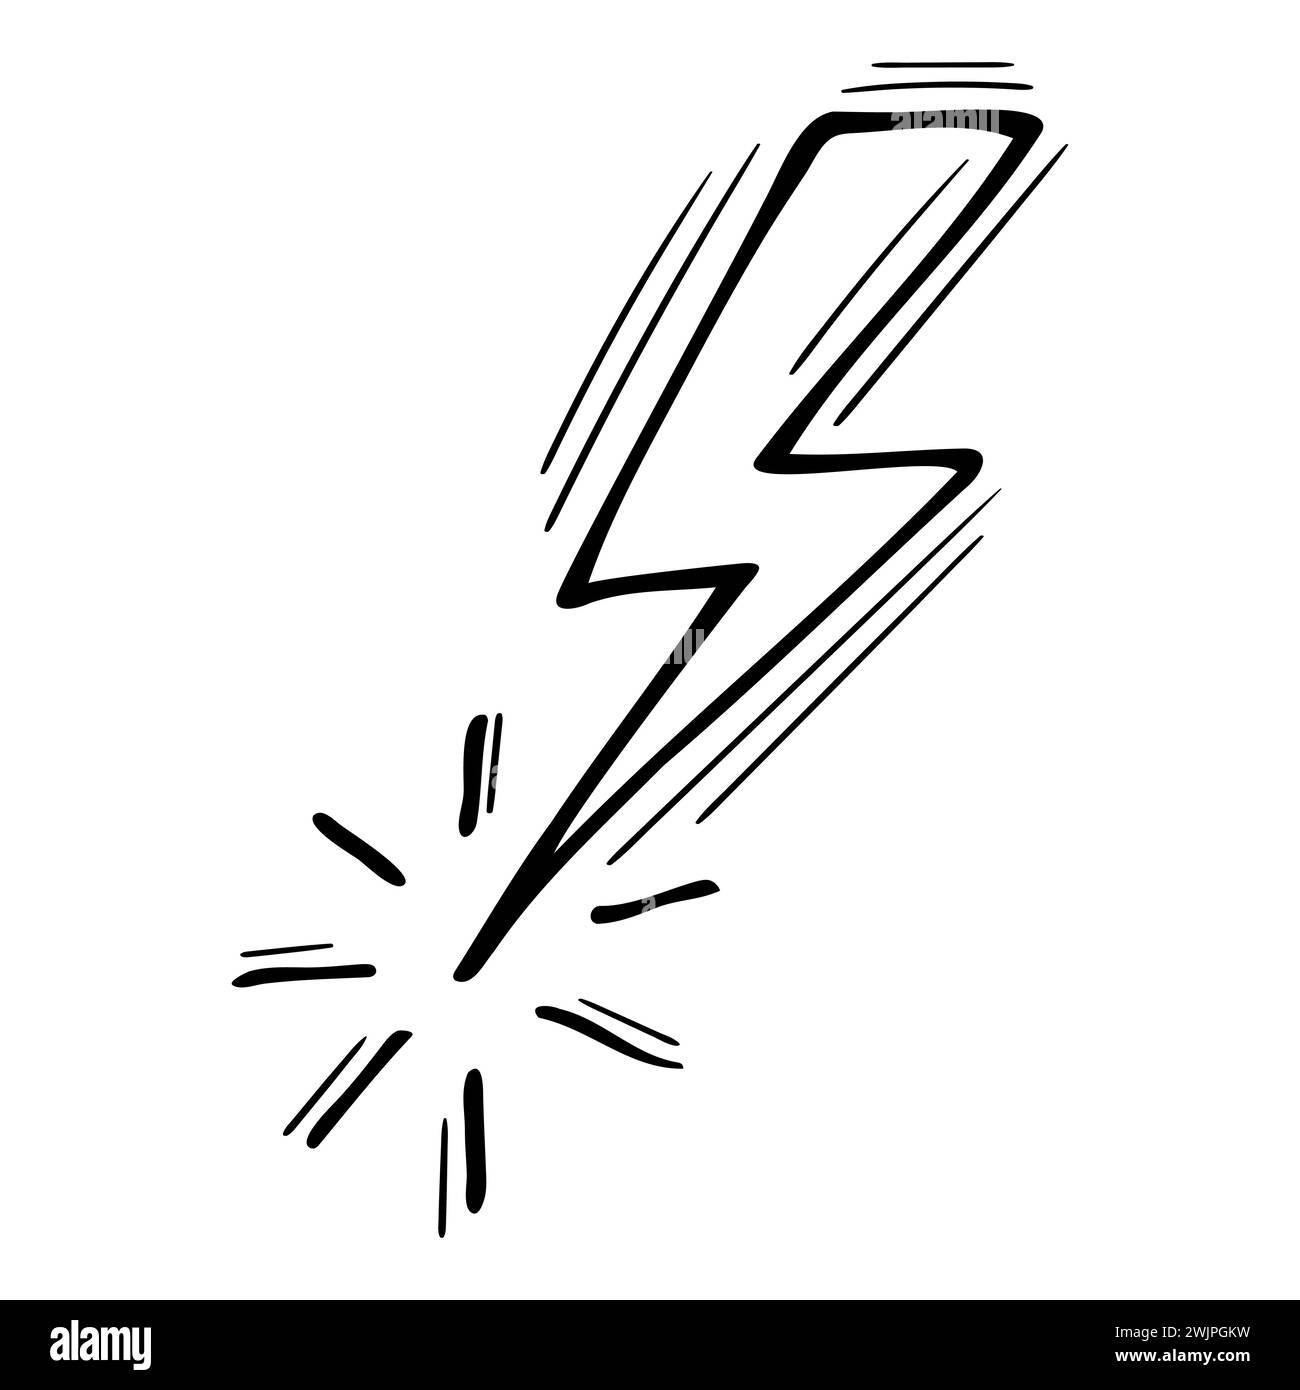 Hand drawn electric lightning. Thunder. Doodle style element. Sketched design. Vector illustration Stock Vector